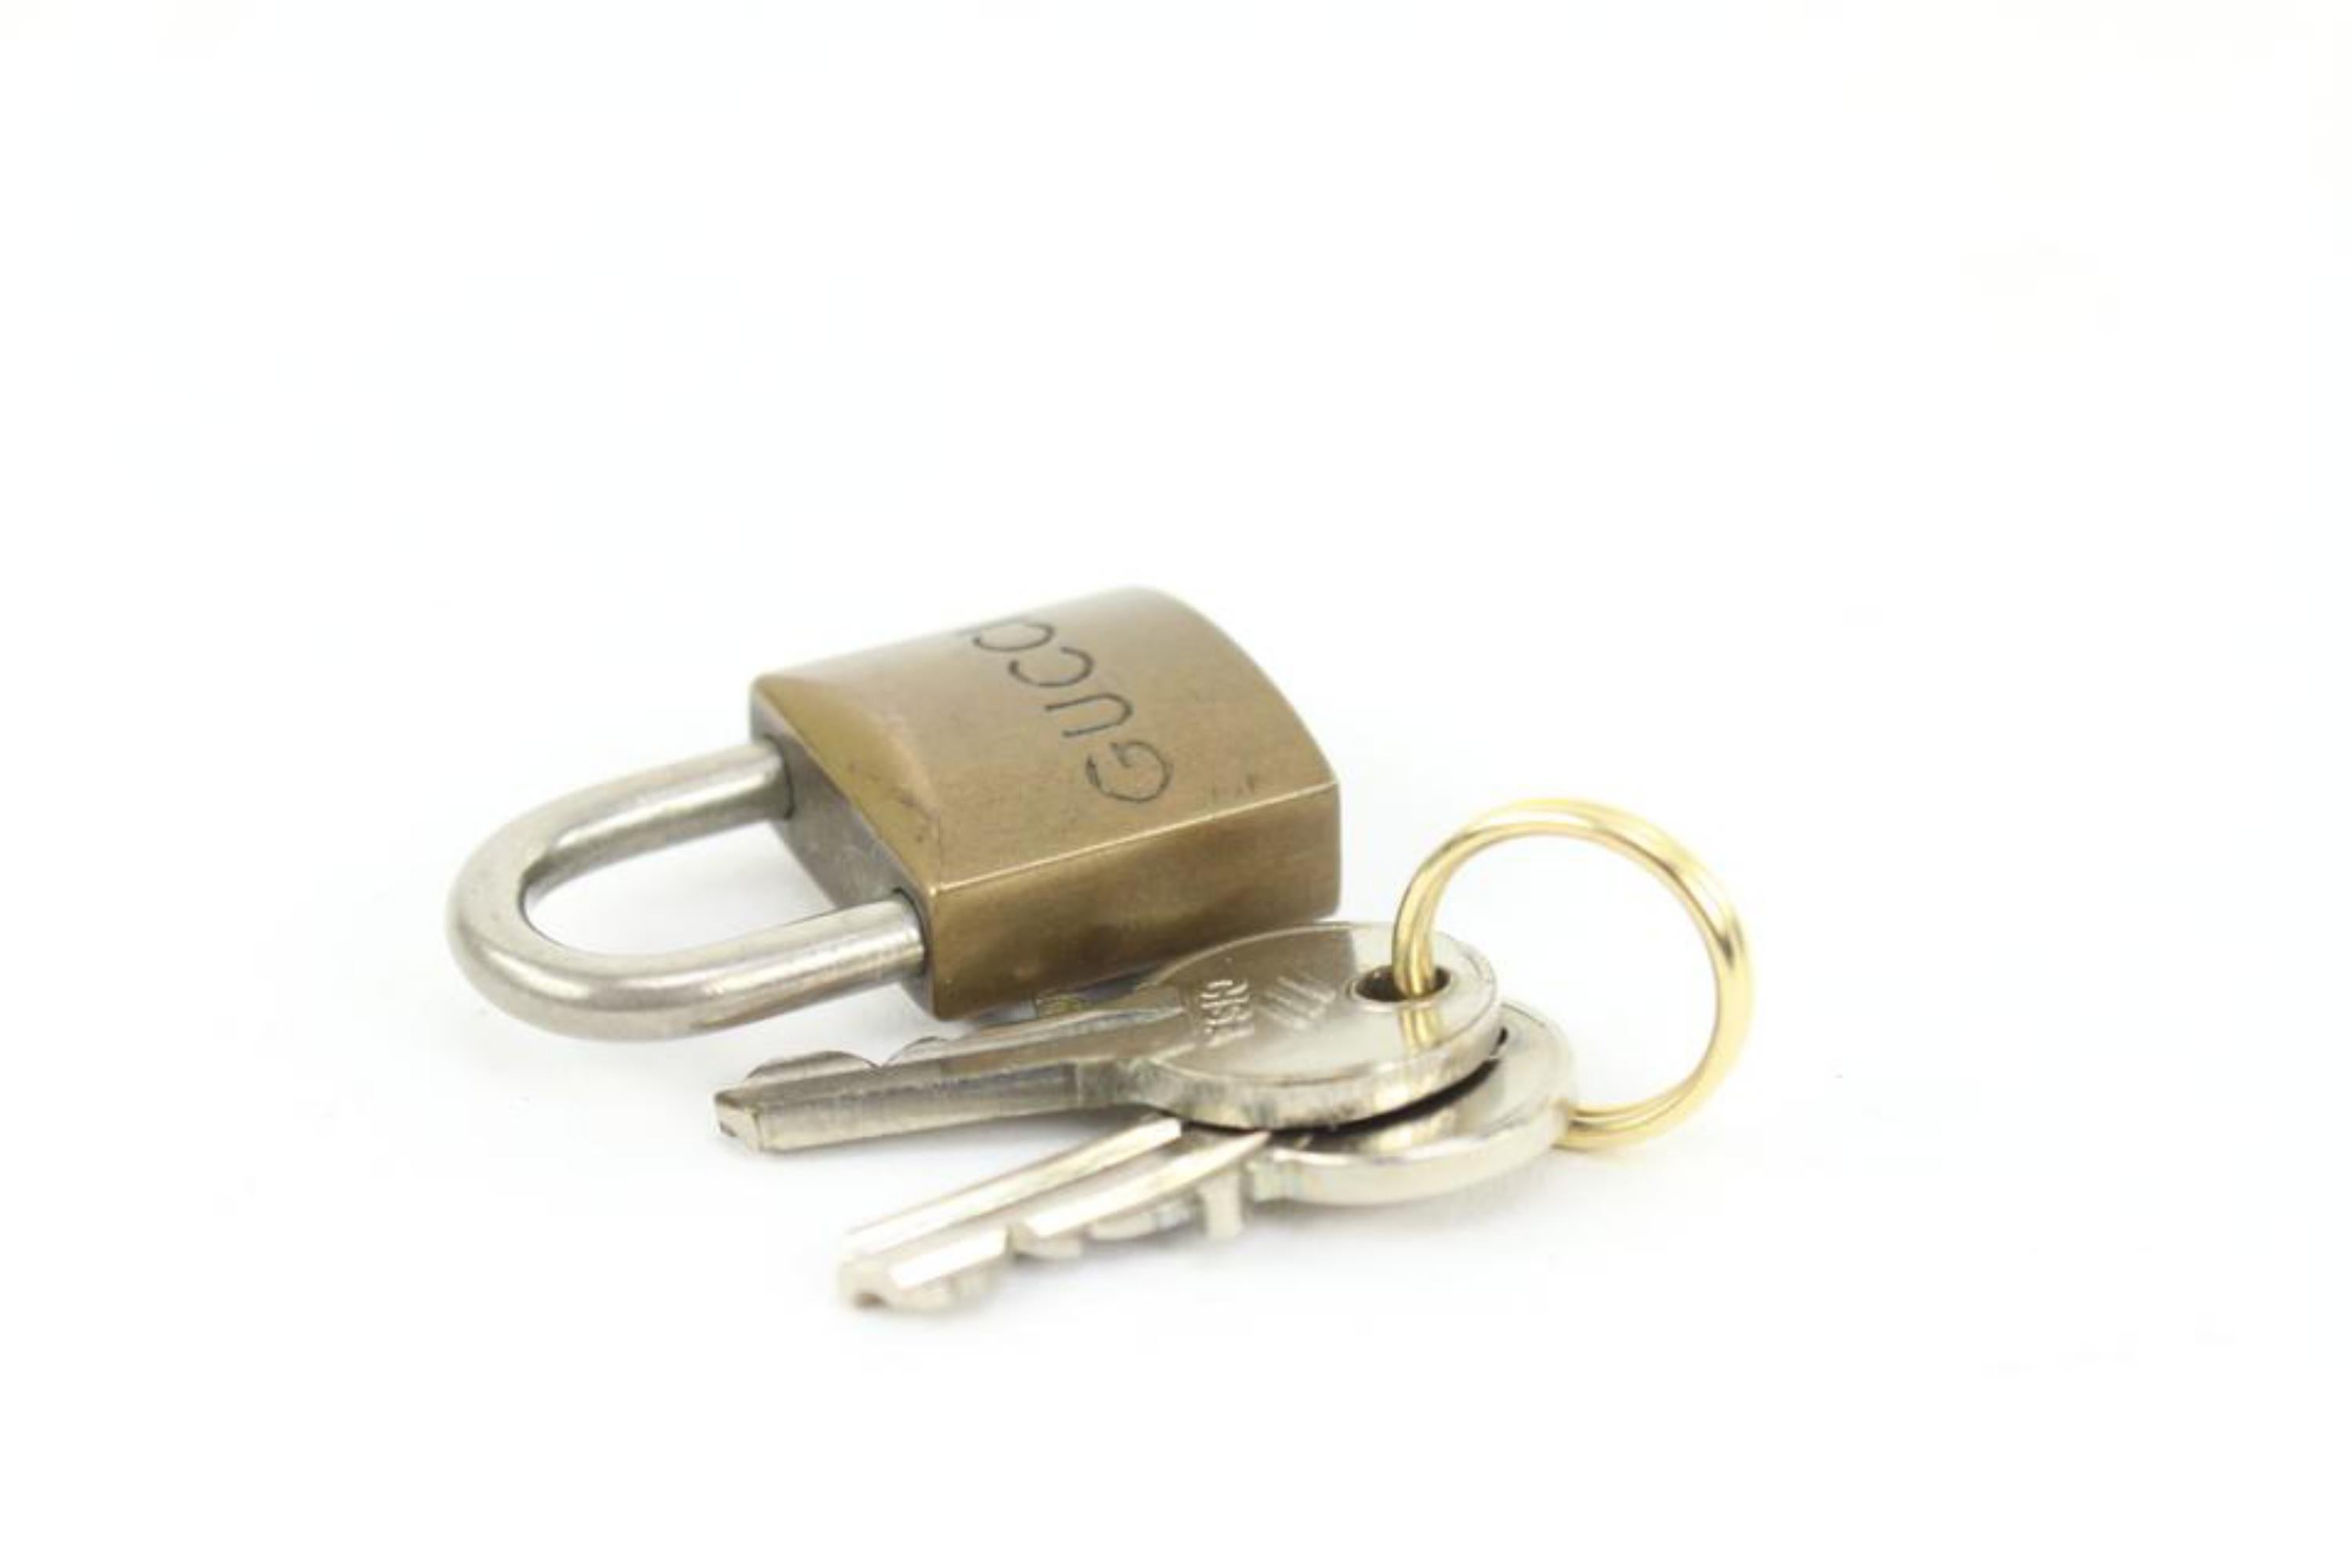 Gucci Vintage Brass Lock and Key Set Cadena Padlock Bag Charm 17g34s
Measurements: Length:  .6